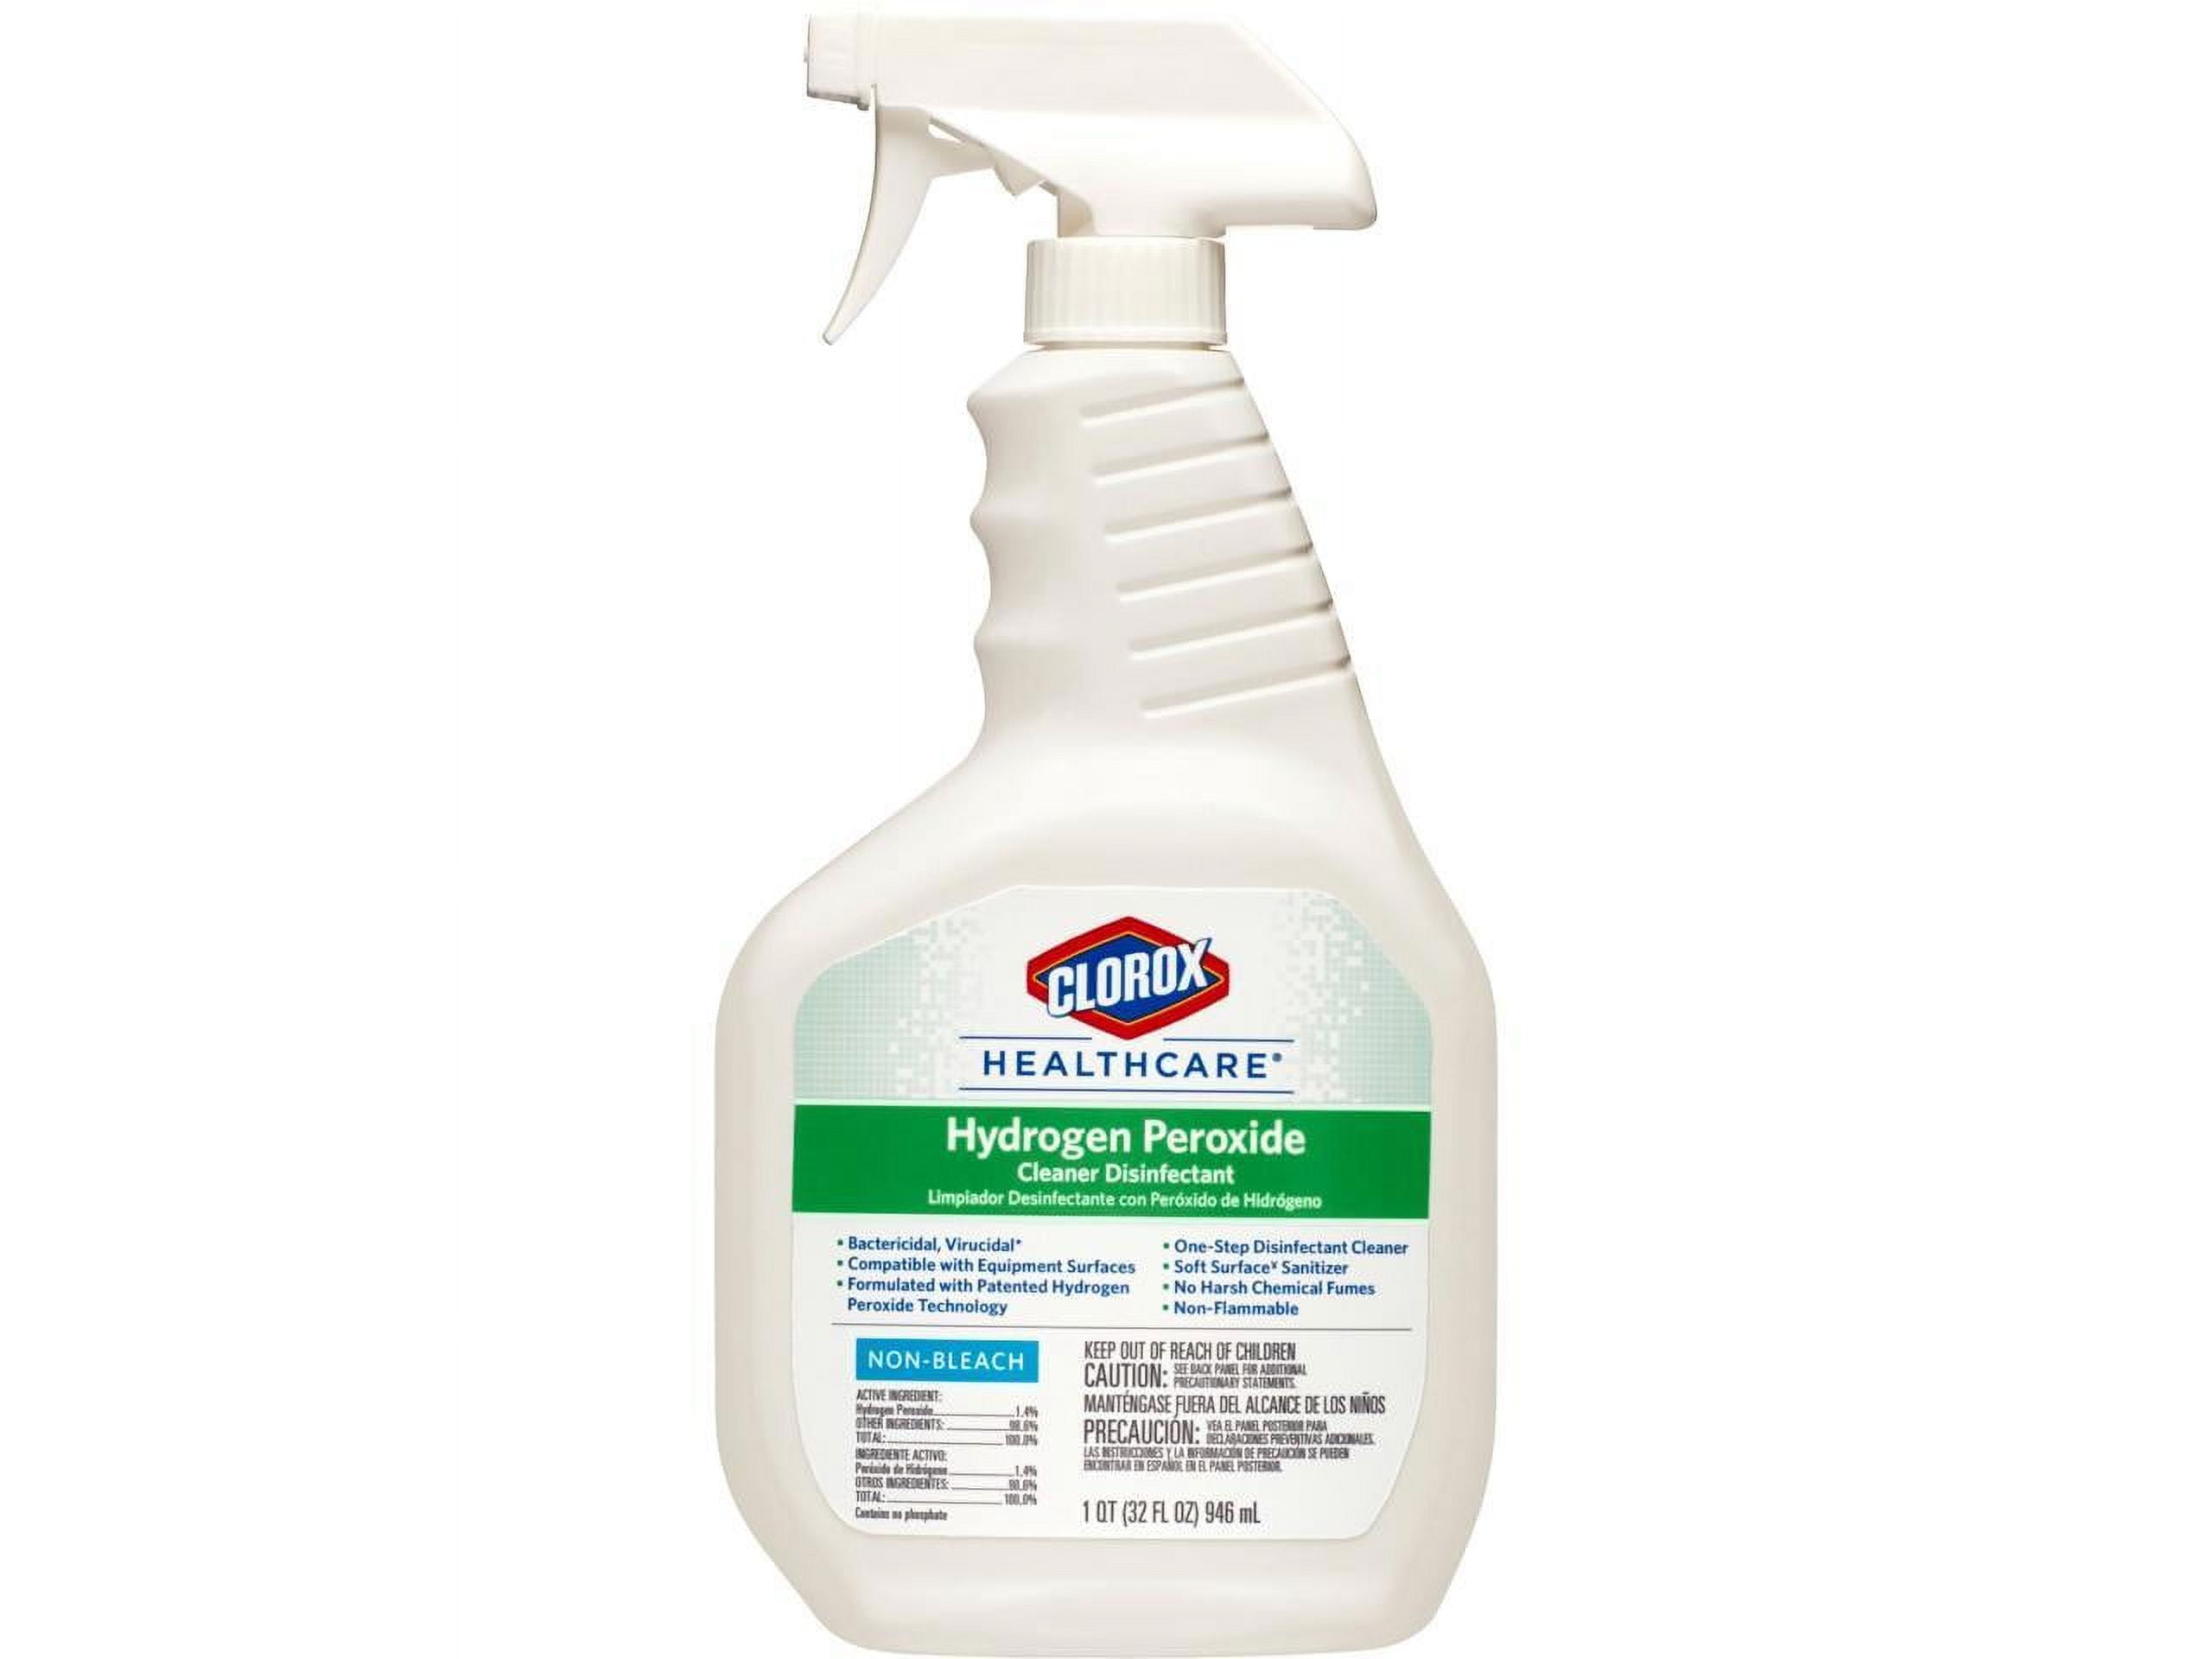 Clorox EcoClean Glass Cleaner Spray - Spray - 32 fl oz (1 quart